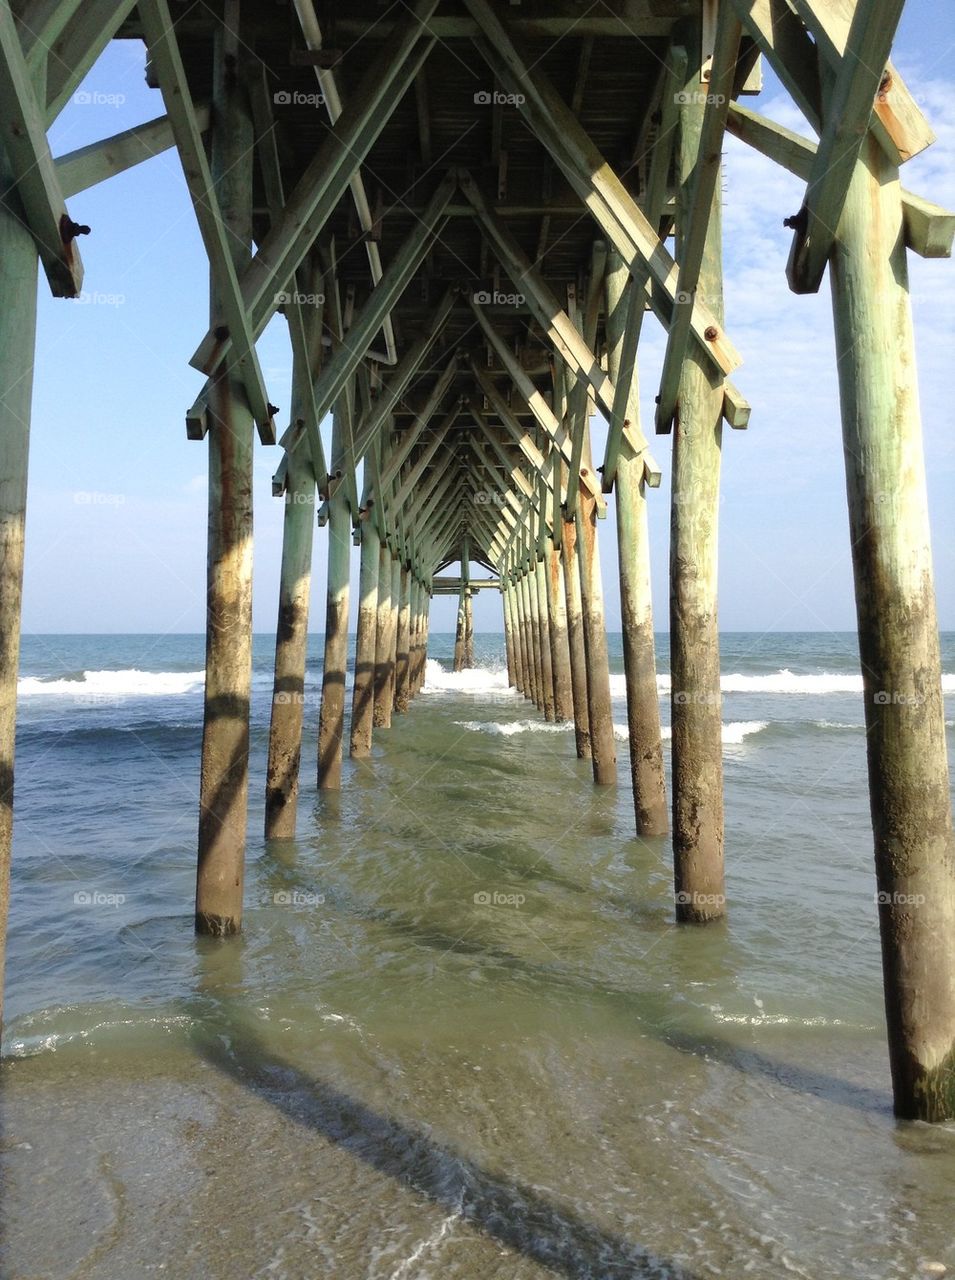 Underneath the pier 